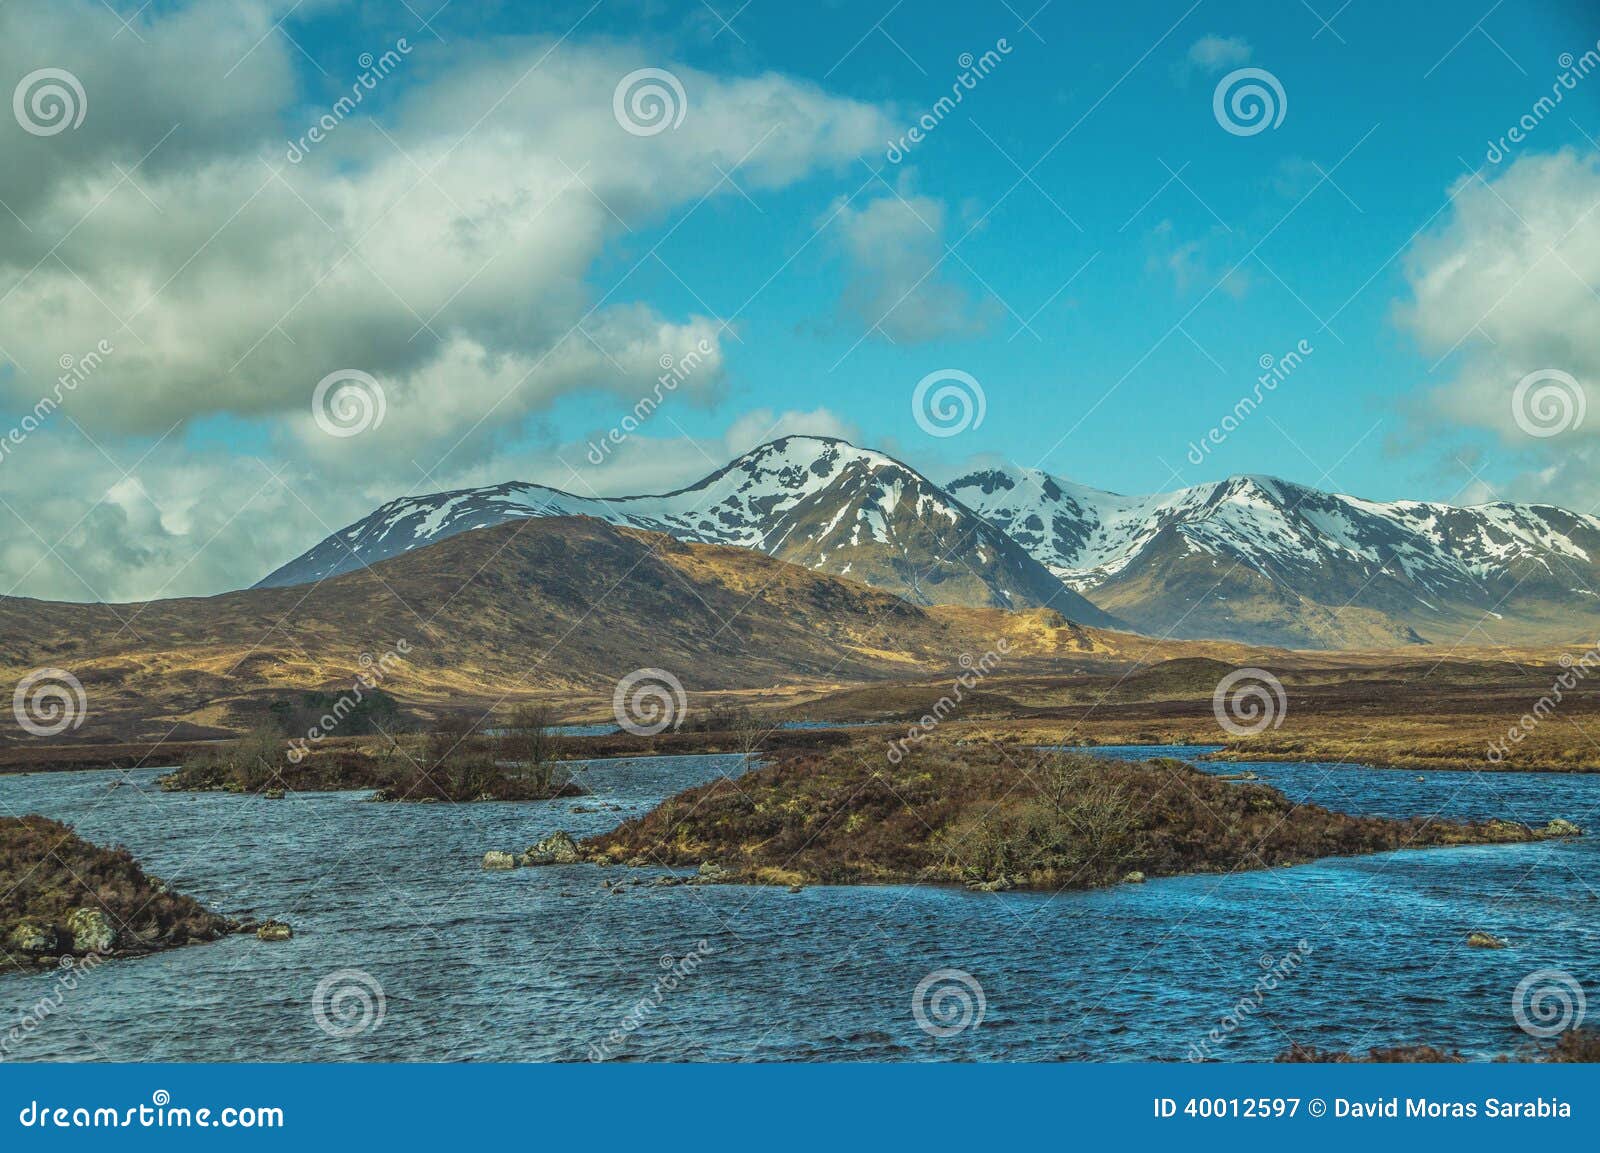 highlands scotland